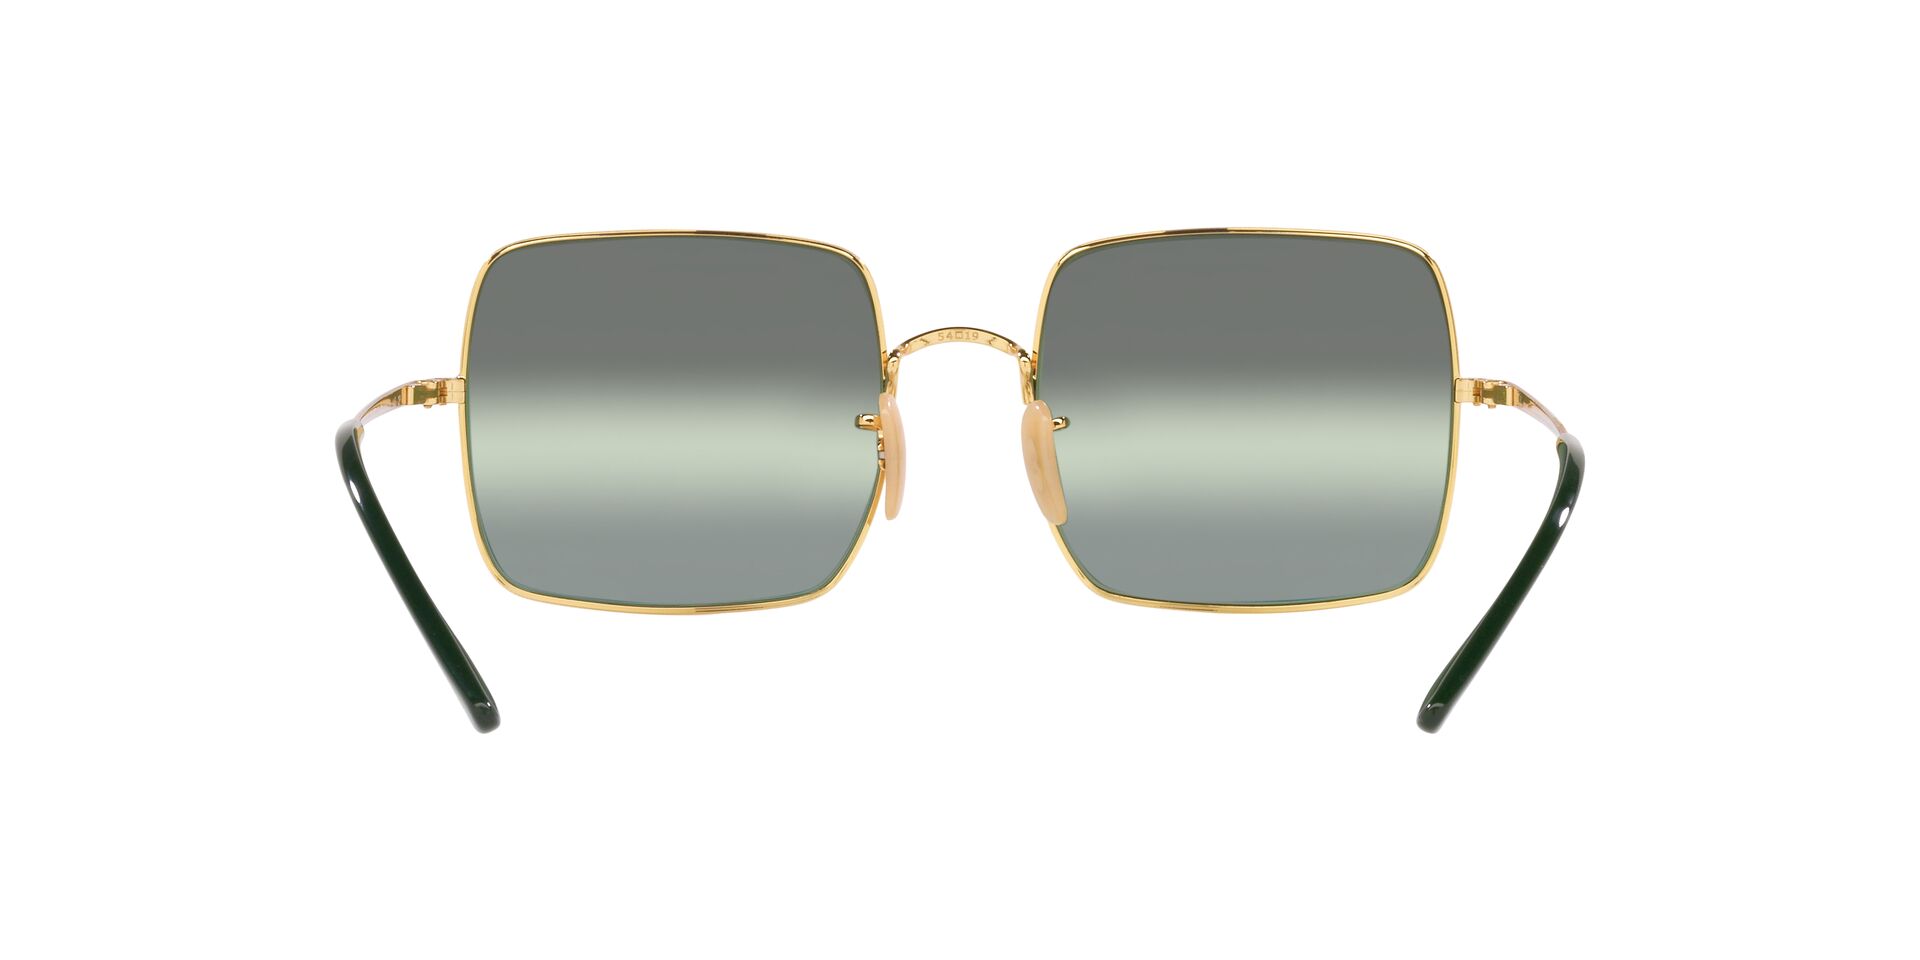 Buy Ray-Ban Evolution Sunglasses Online.